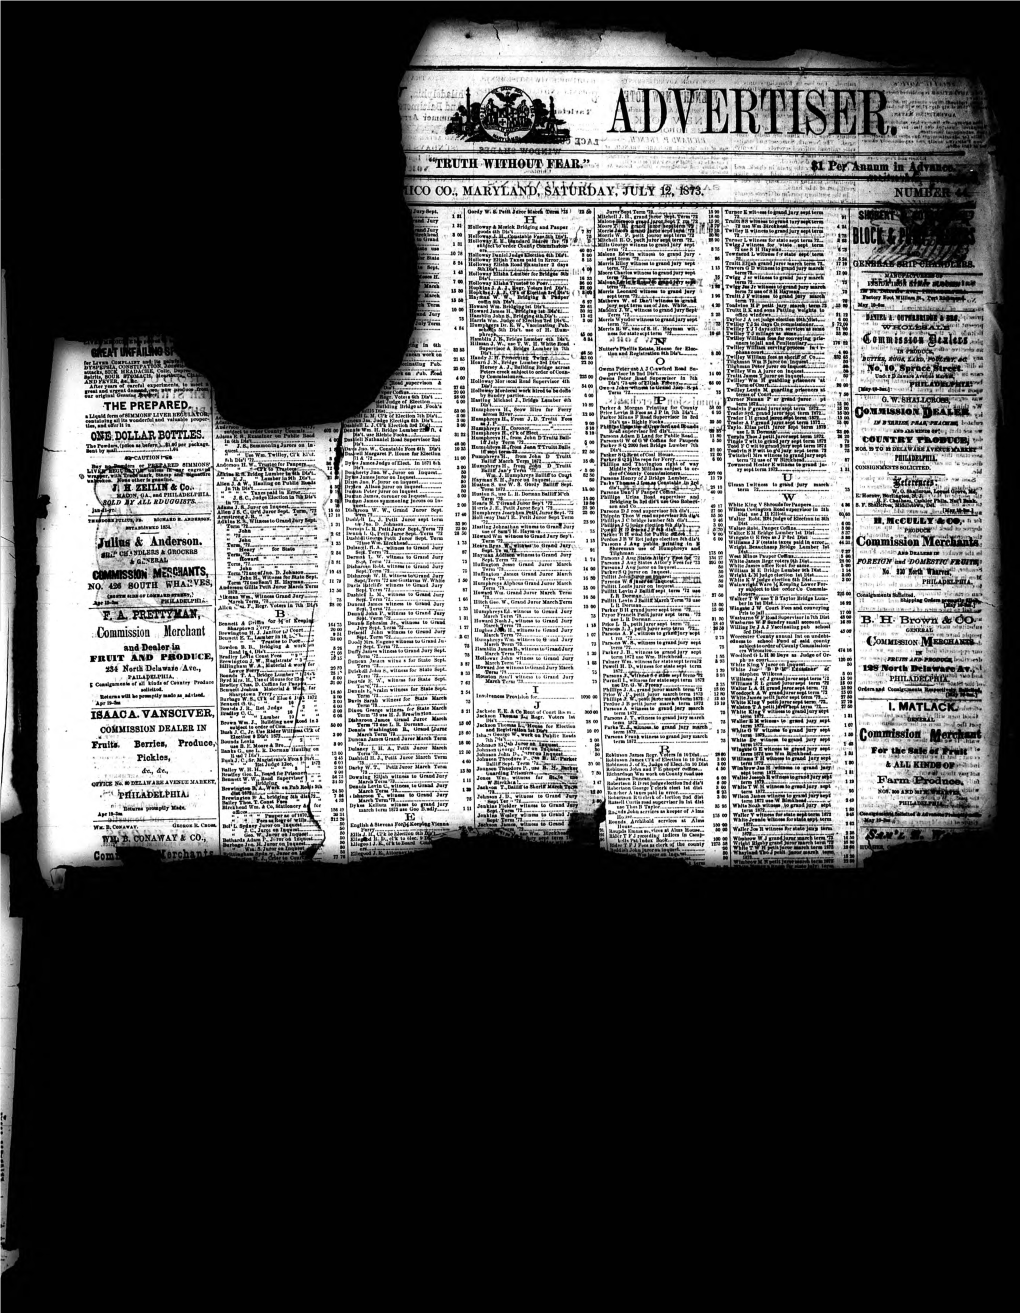 Salisbury Advertiser 07-1873.Pdf (9.954Mb)